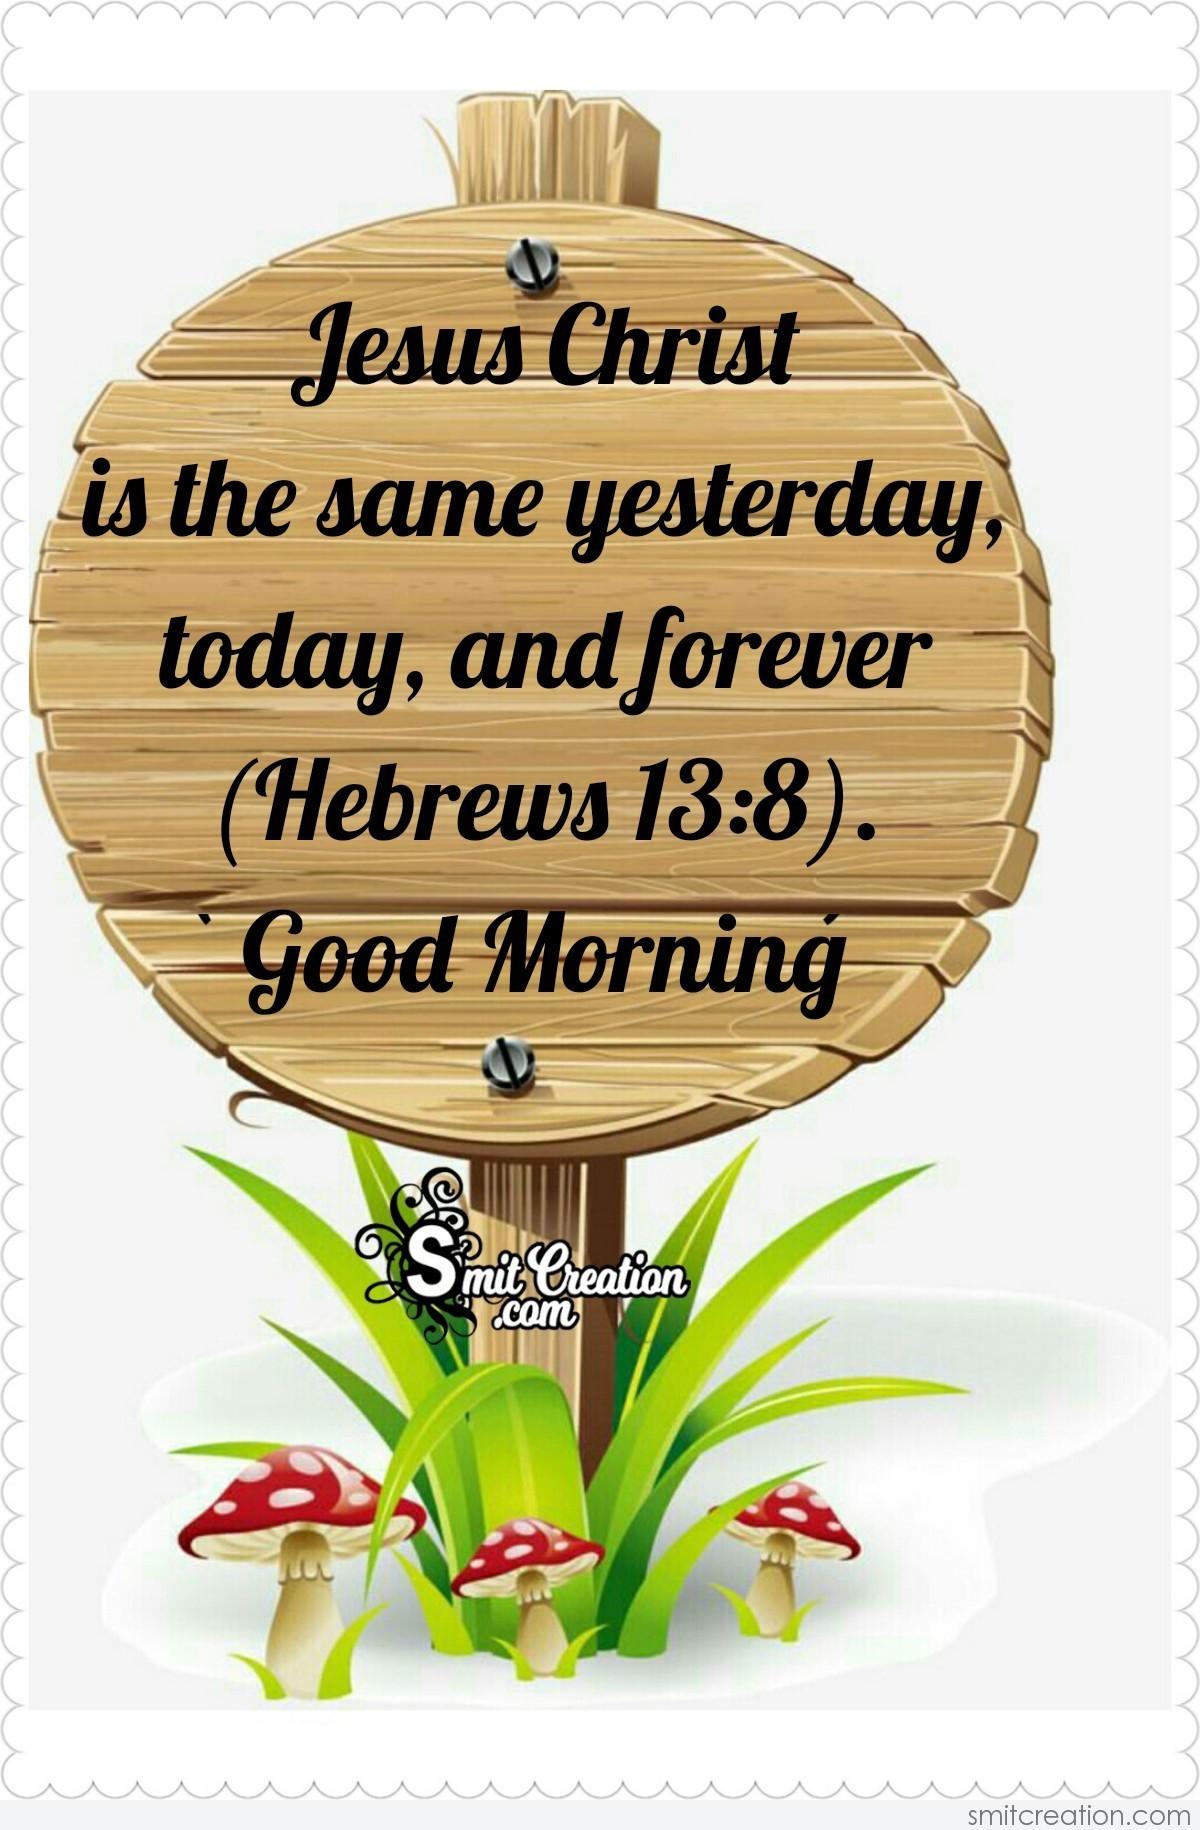 Good Morning Bible Quote - SmitCreation.com